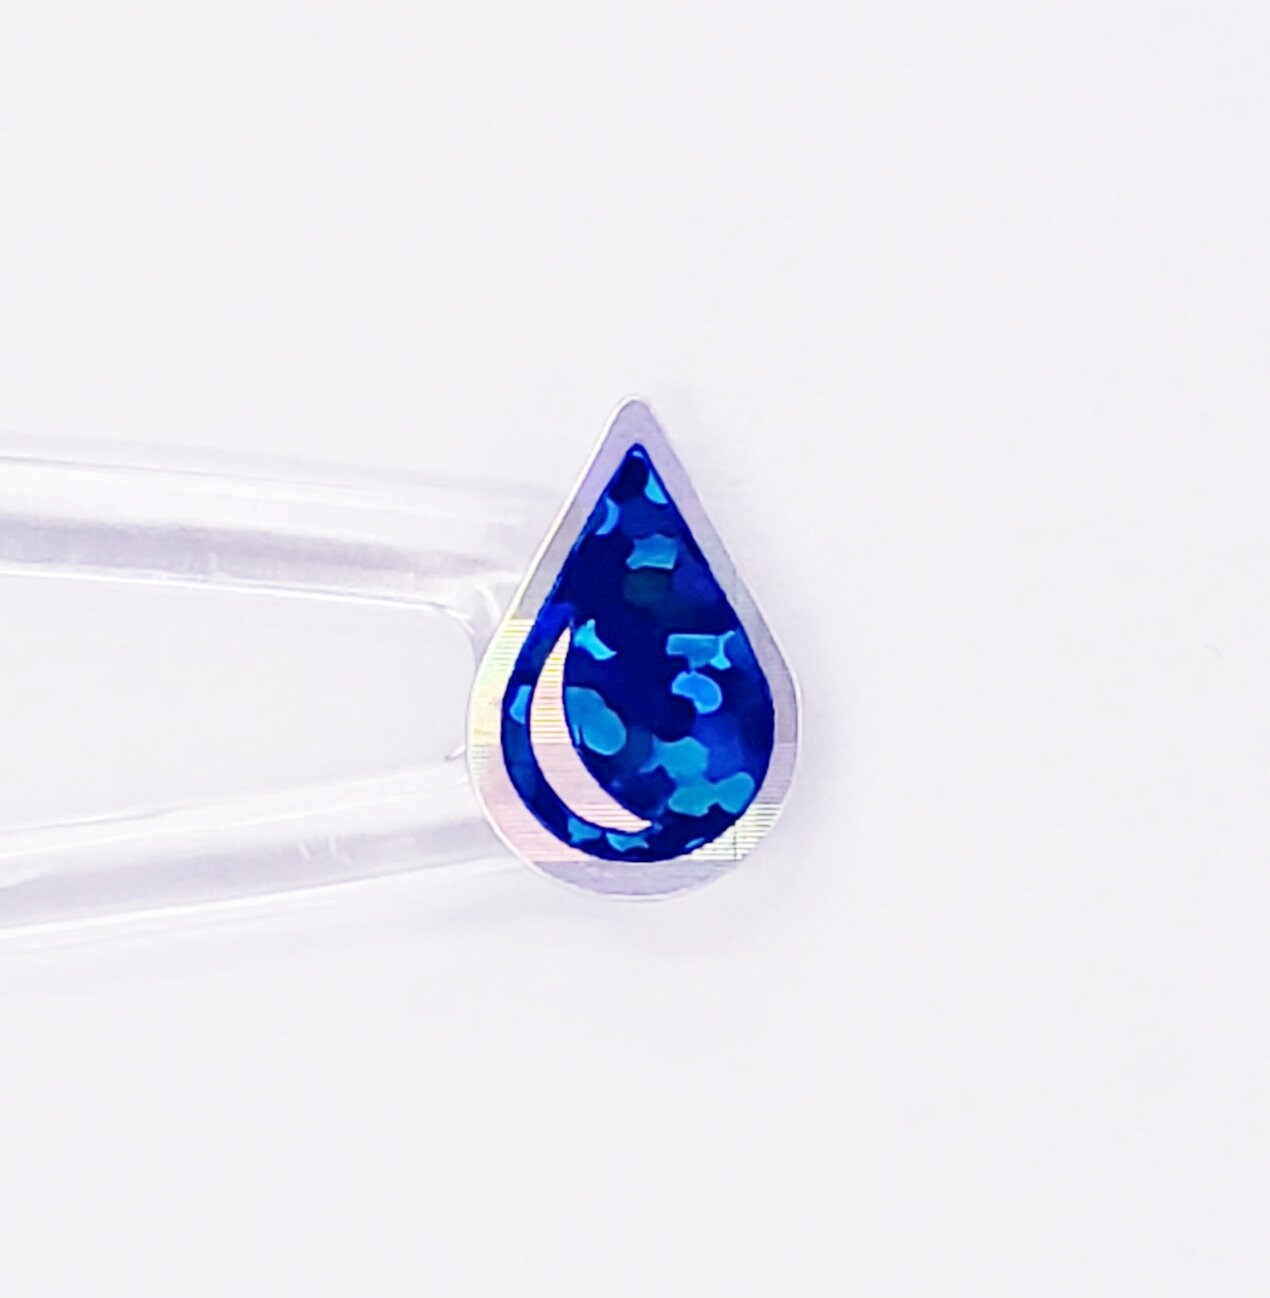 Dark Blue Water Drop Stickers